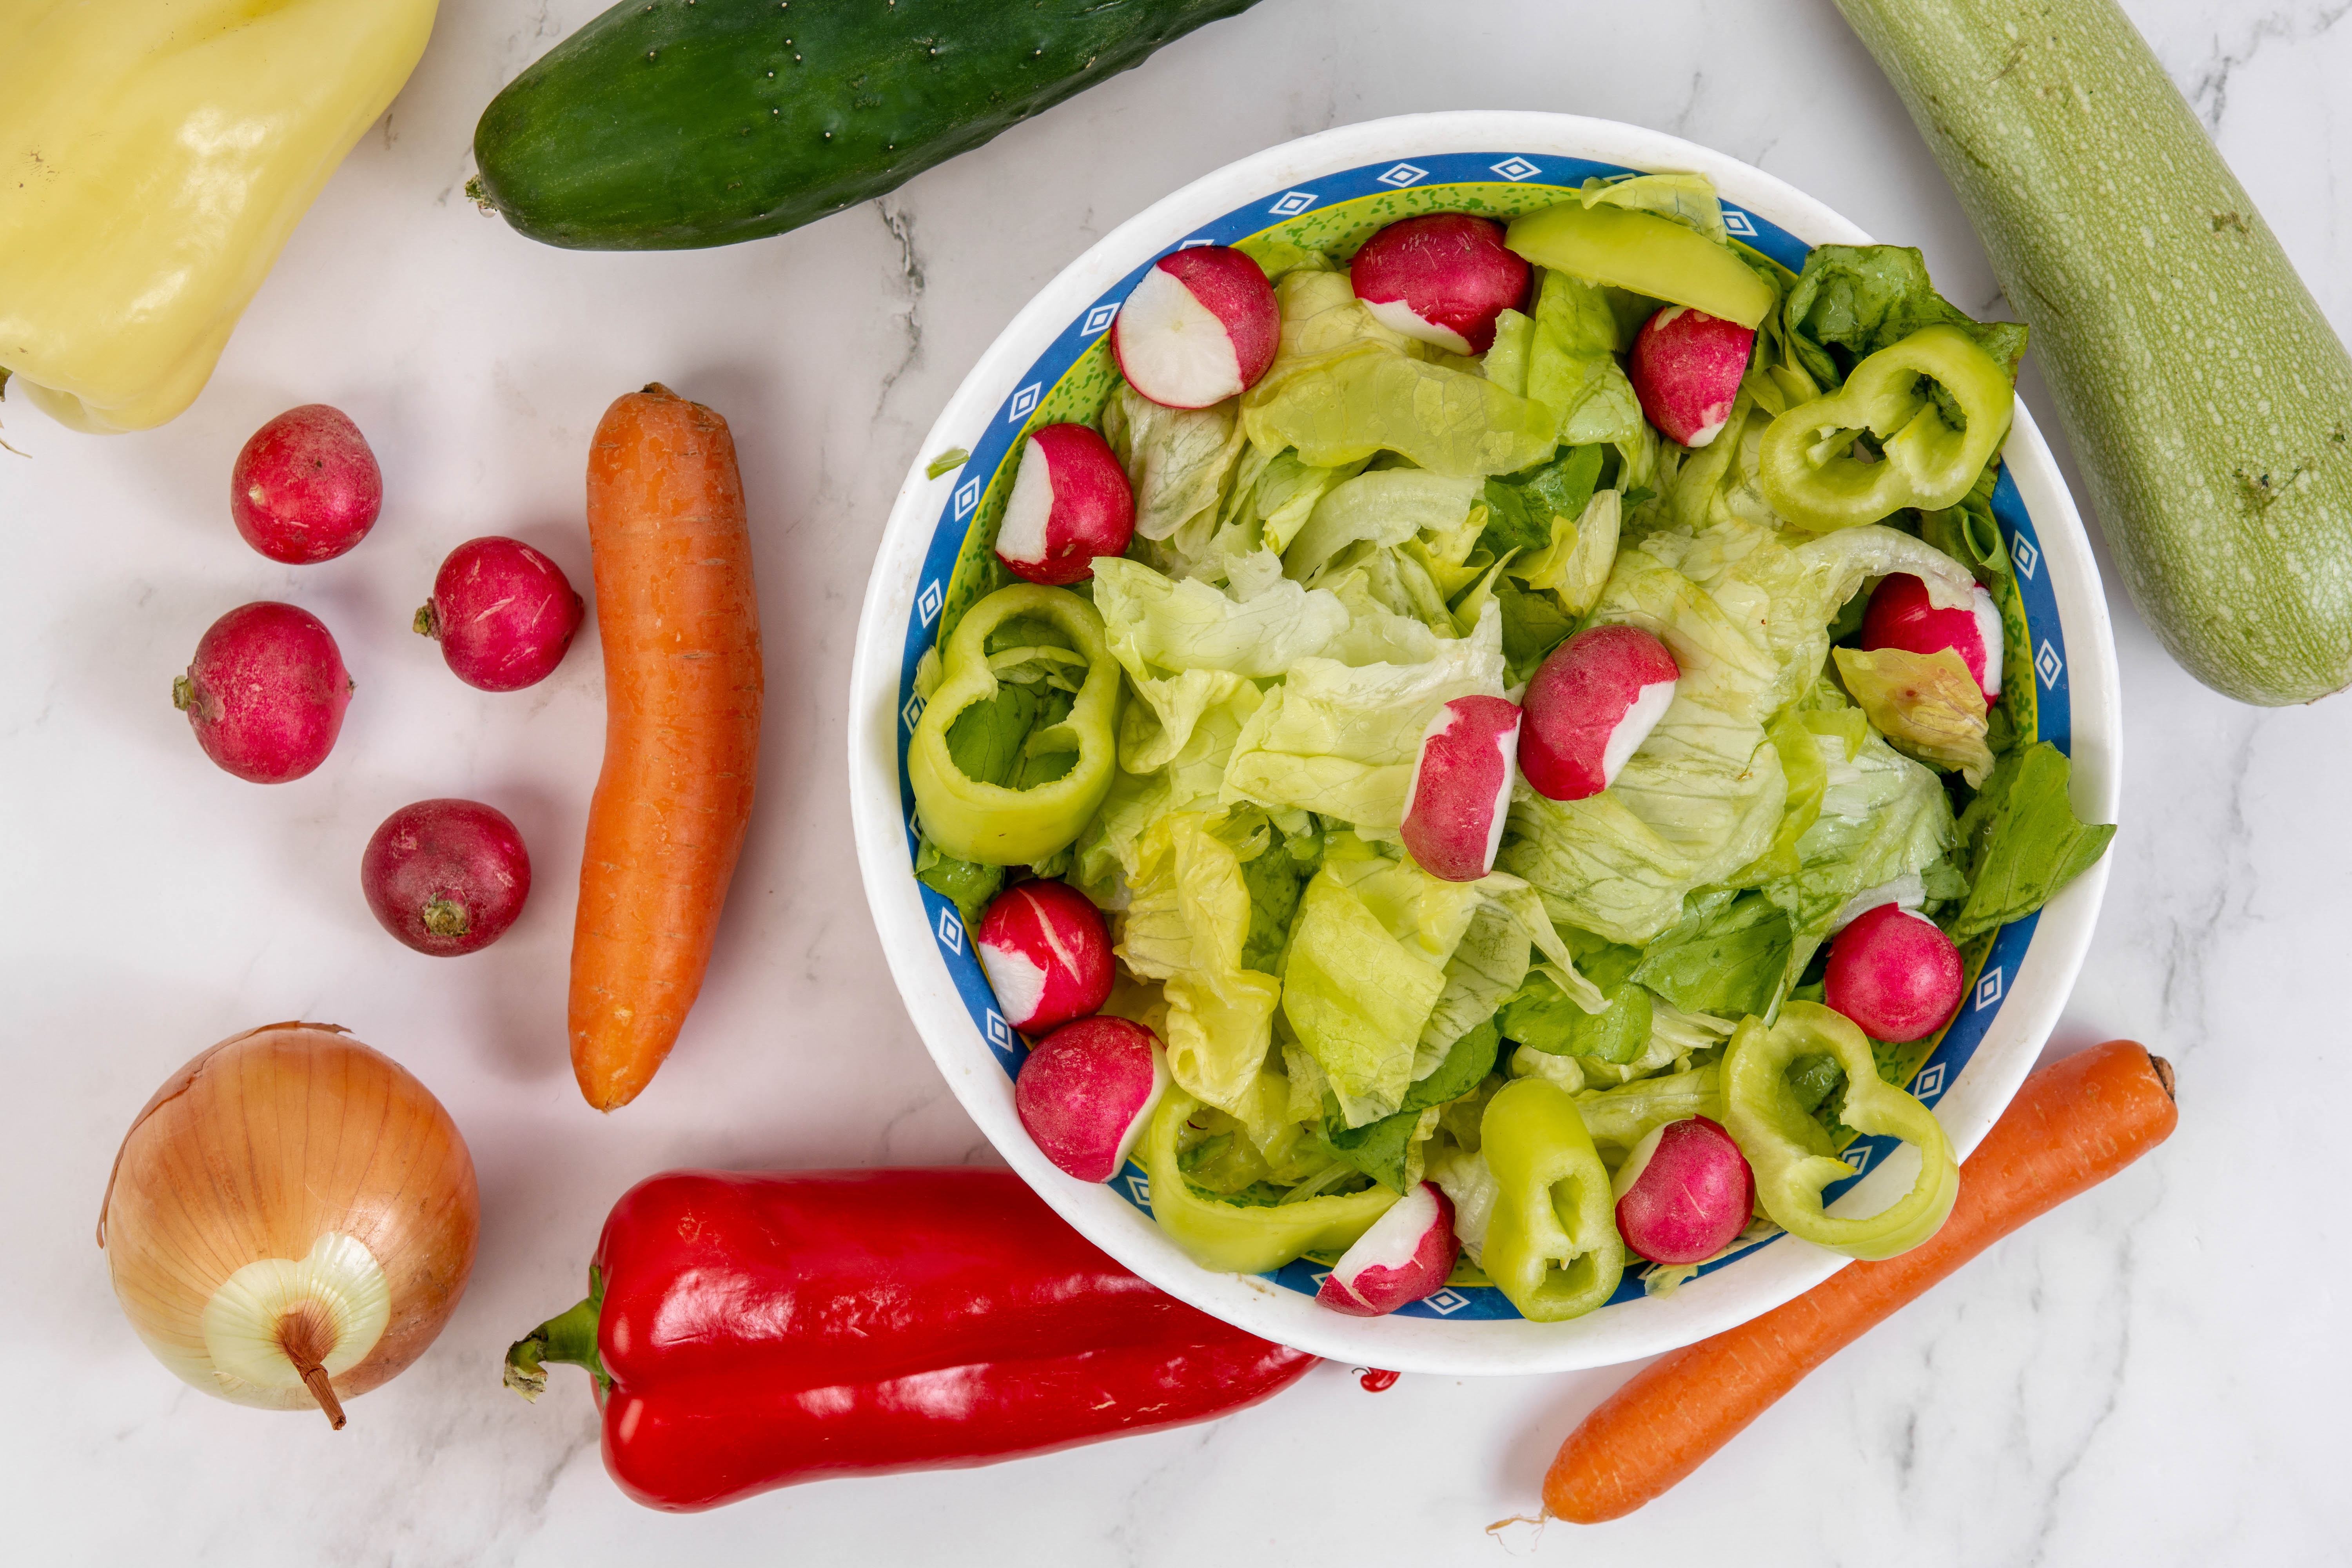 Tasty vegetables. Салат. Тарелка с овощами. Овощи на столе. Салат из овощей.